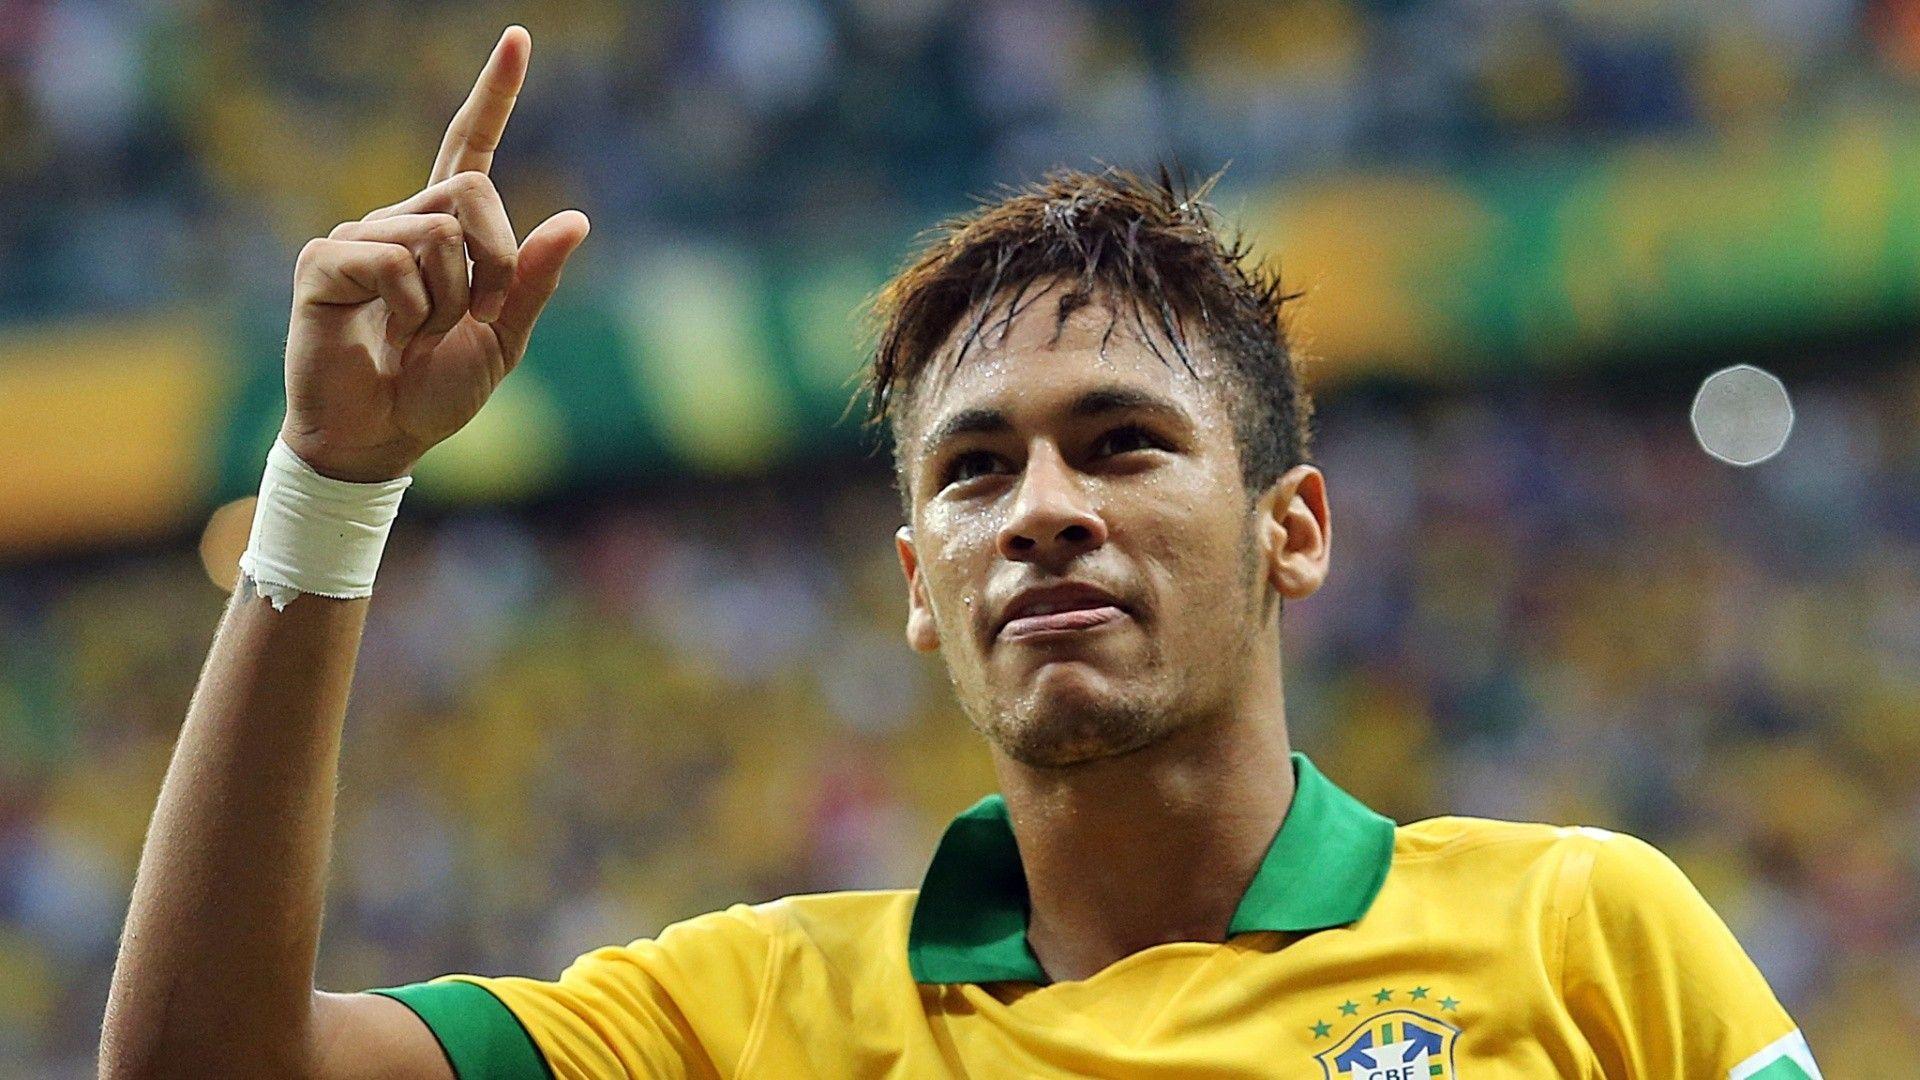 Neymar Fifa Confederations Cup 2013 Of Football id: 182843